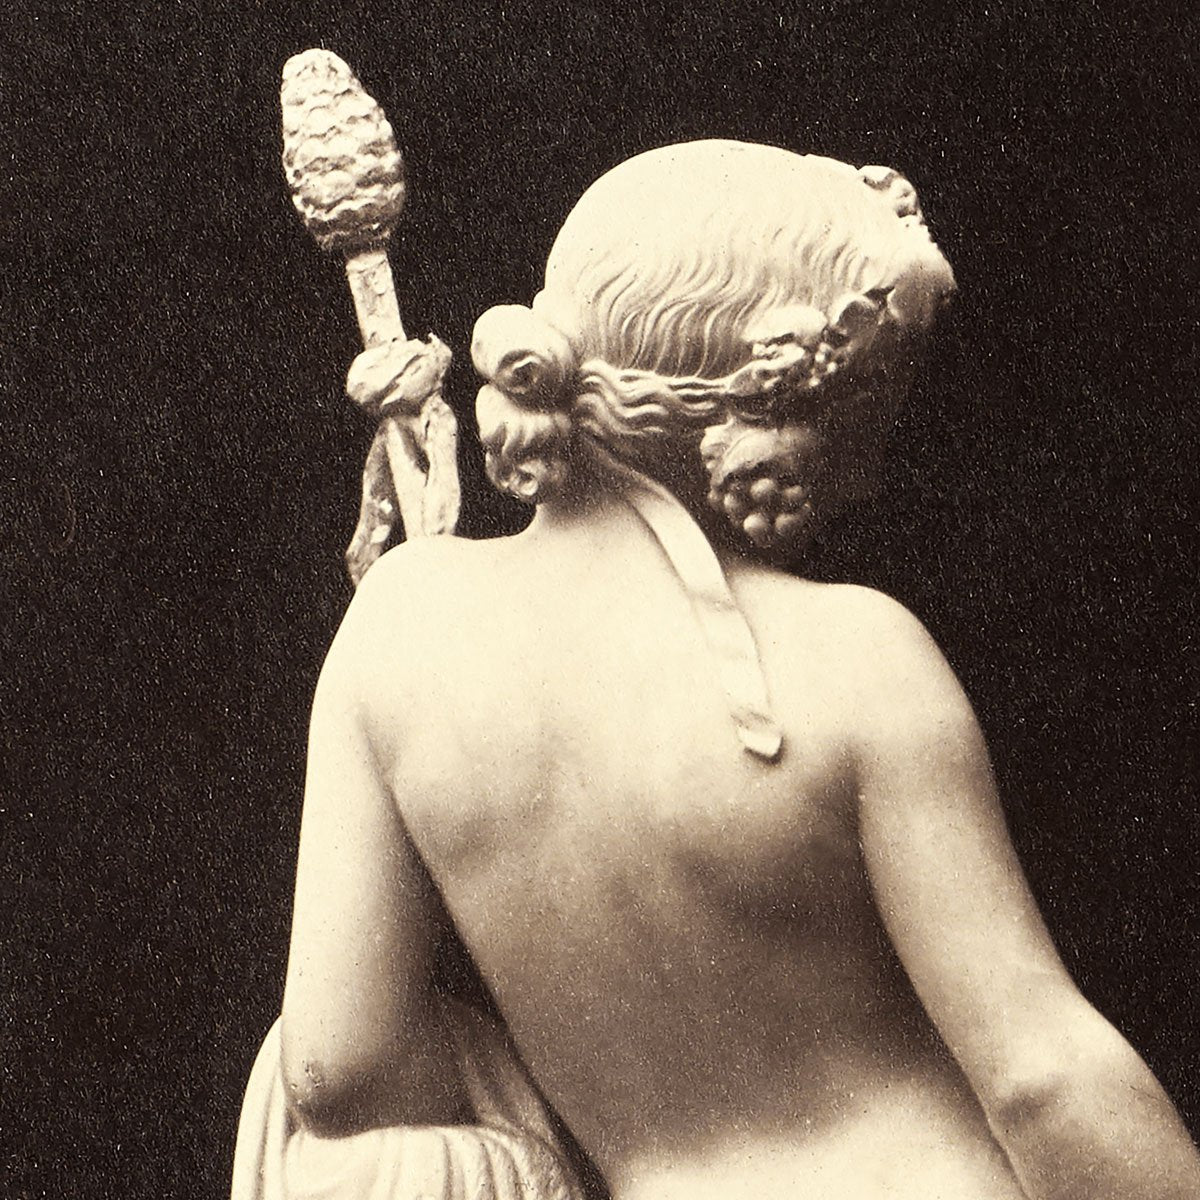 Erotic Vintage Sculpture Naked Woman